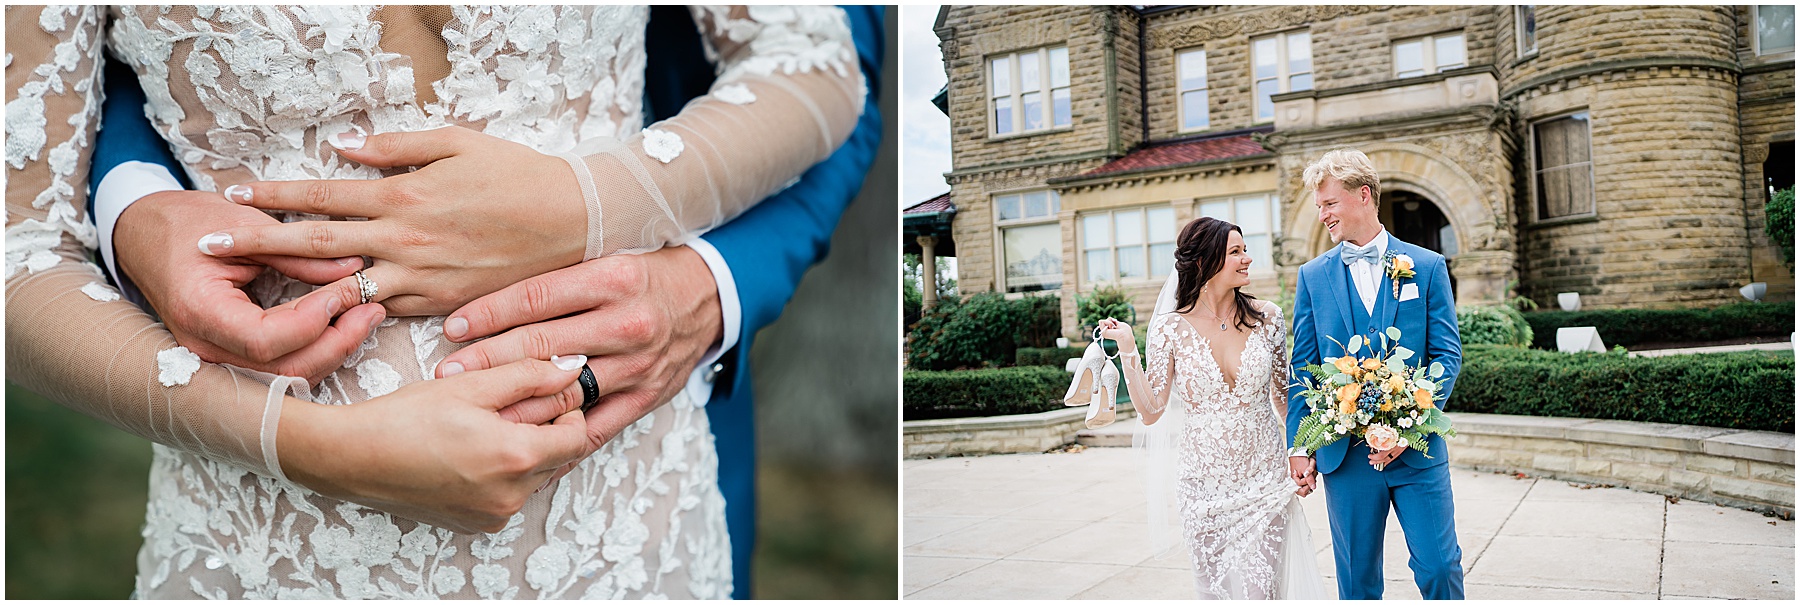 Fort Wayne wedding photographers capture close up bridal portraits after wedding ceremony